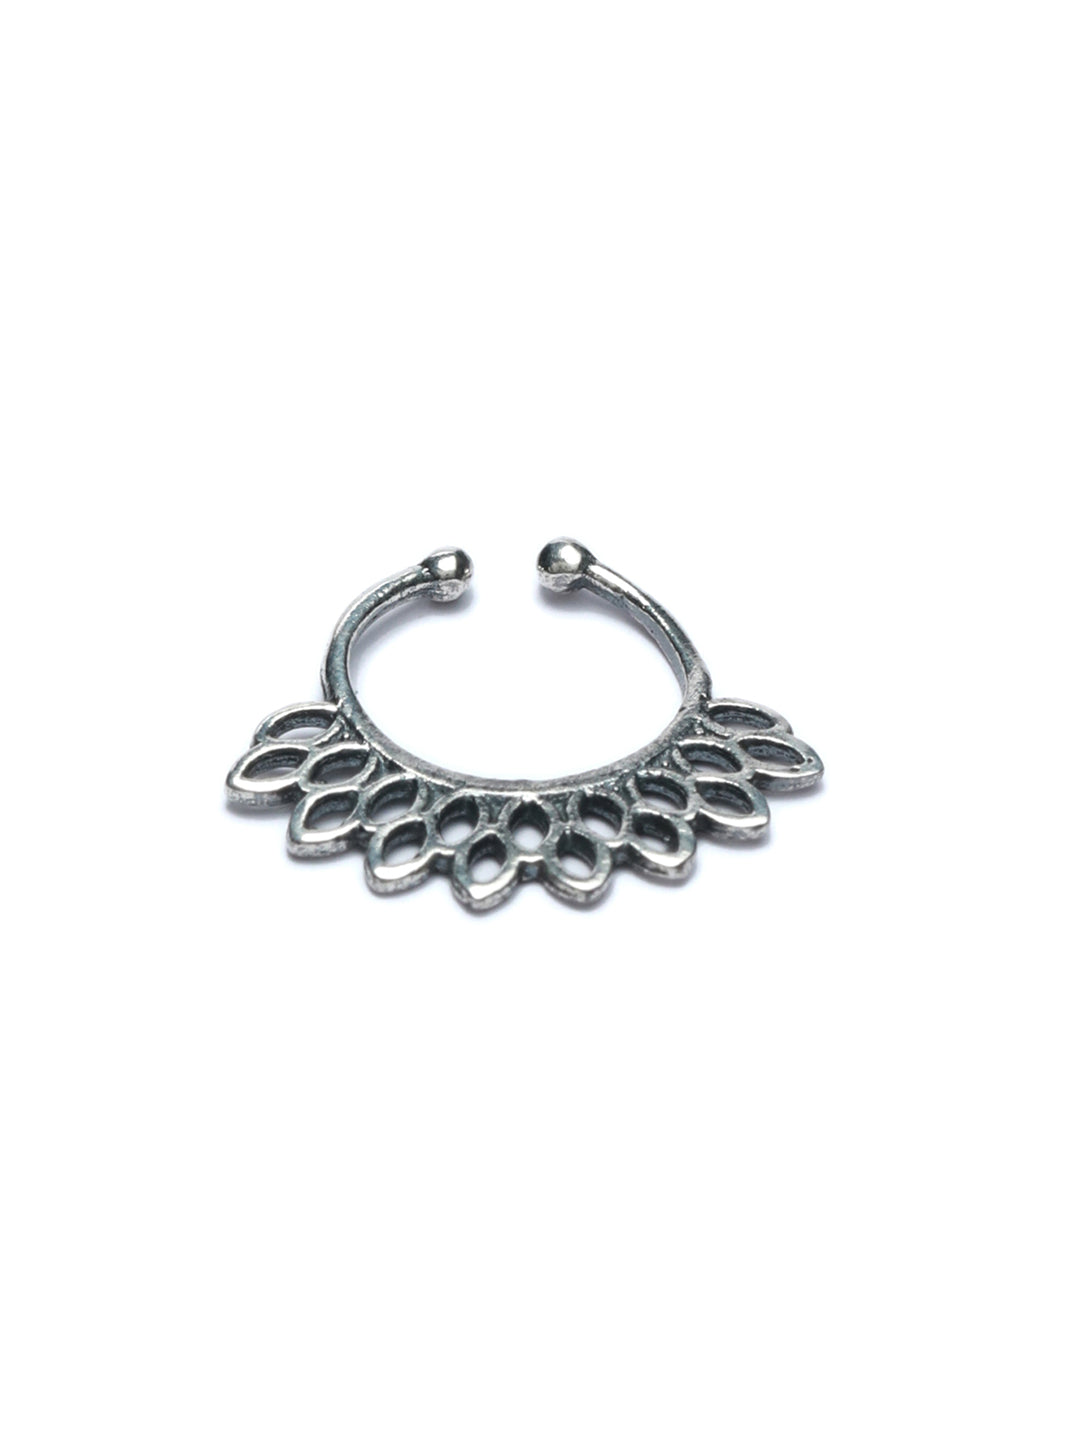 MODRSA Septum Ring Septum Piercing Jewelry 16g India | Ubuy